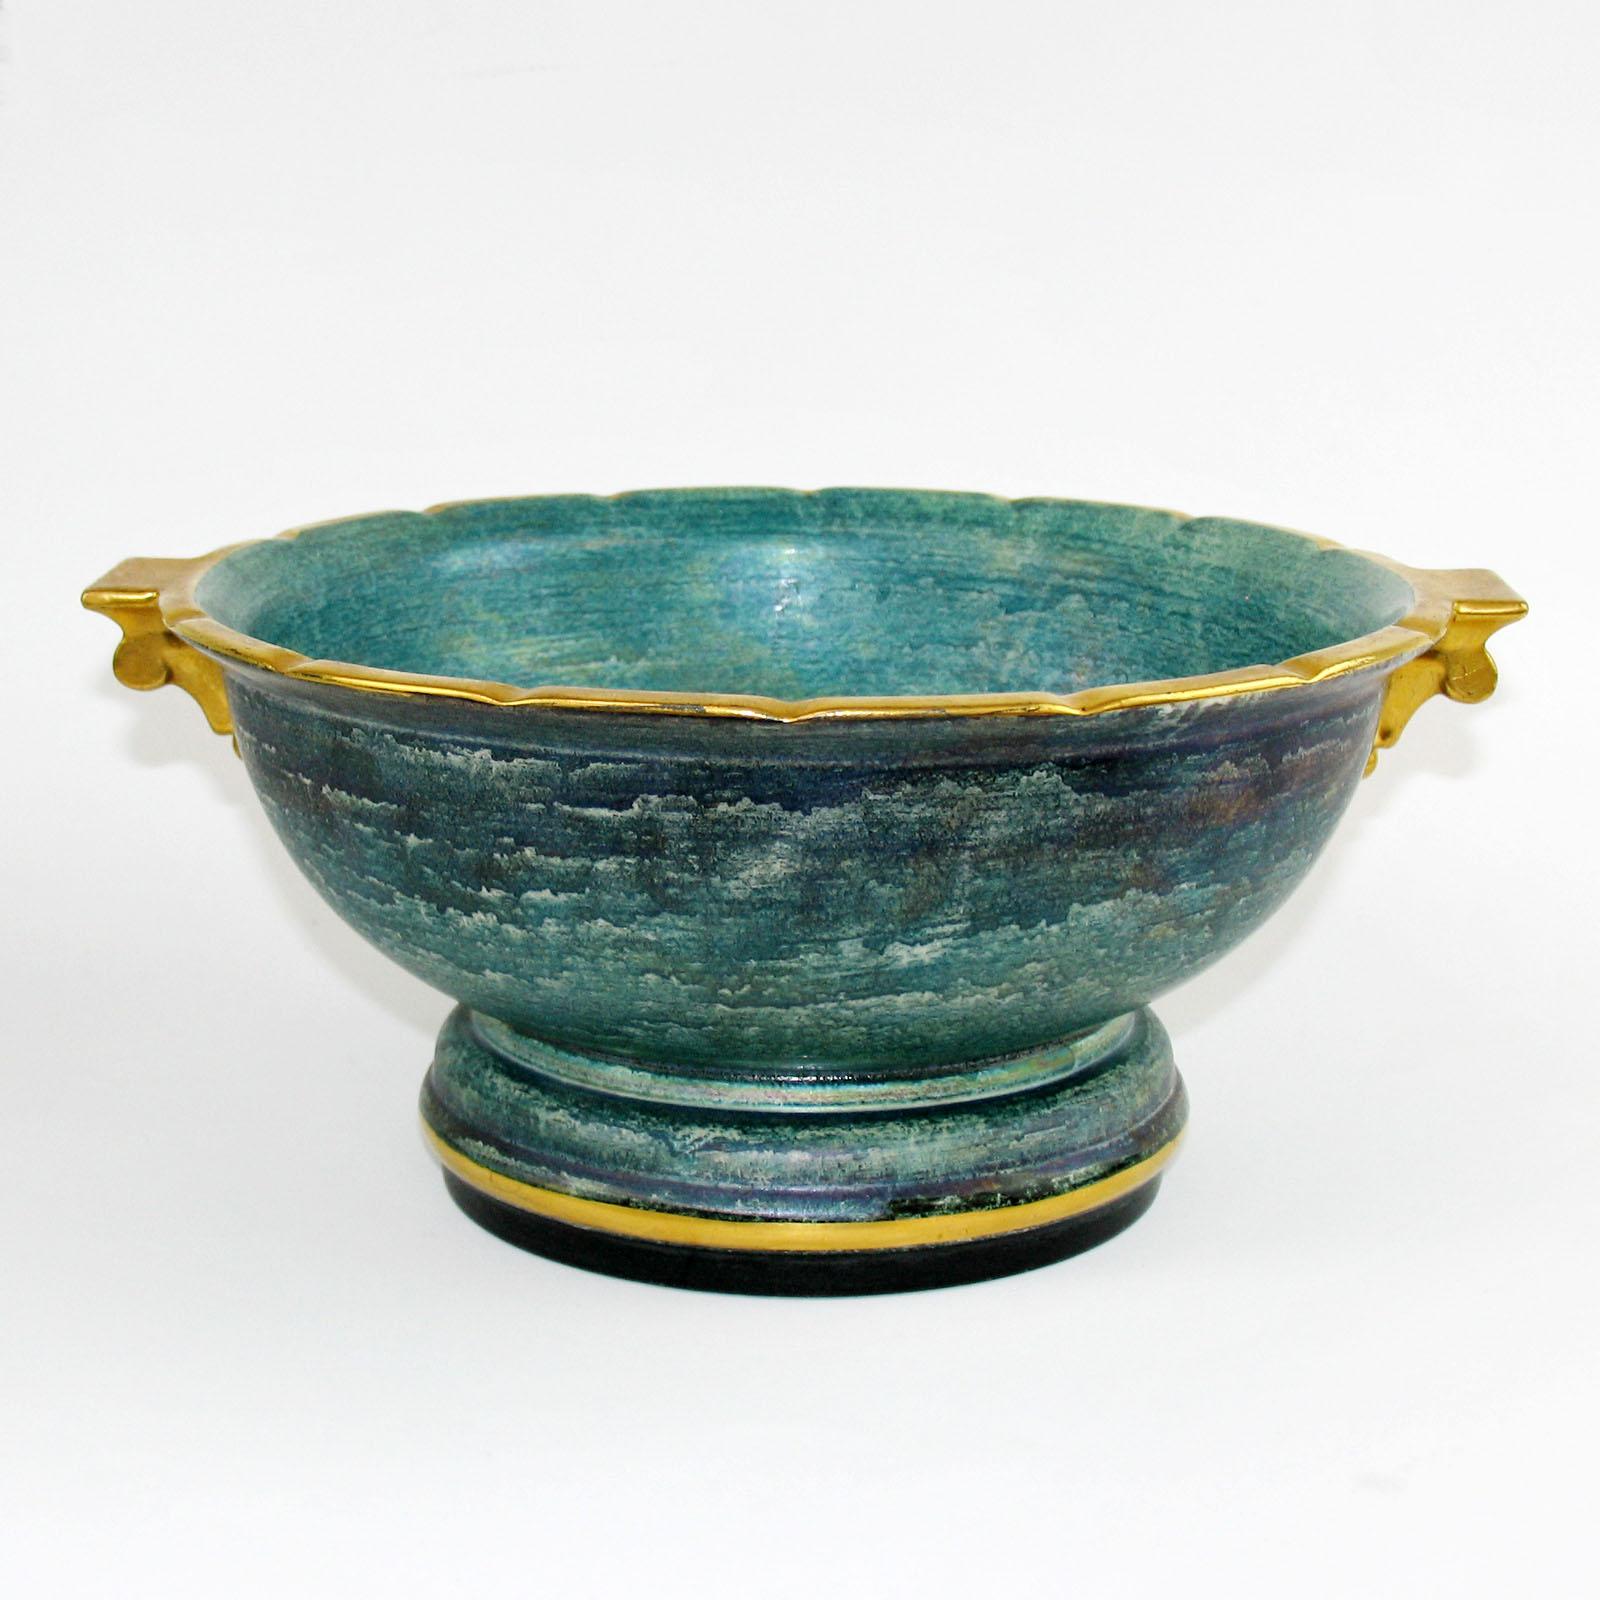 Glazed Josef Ekberg Green and Gold Ceramic Footed Bowl, Gustavsberg, Sweden 1930s For Sale